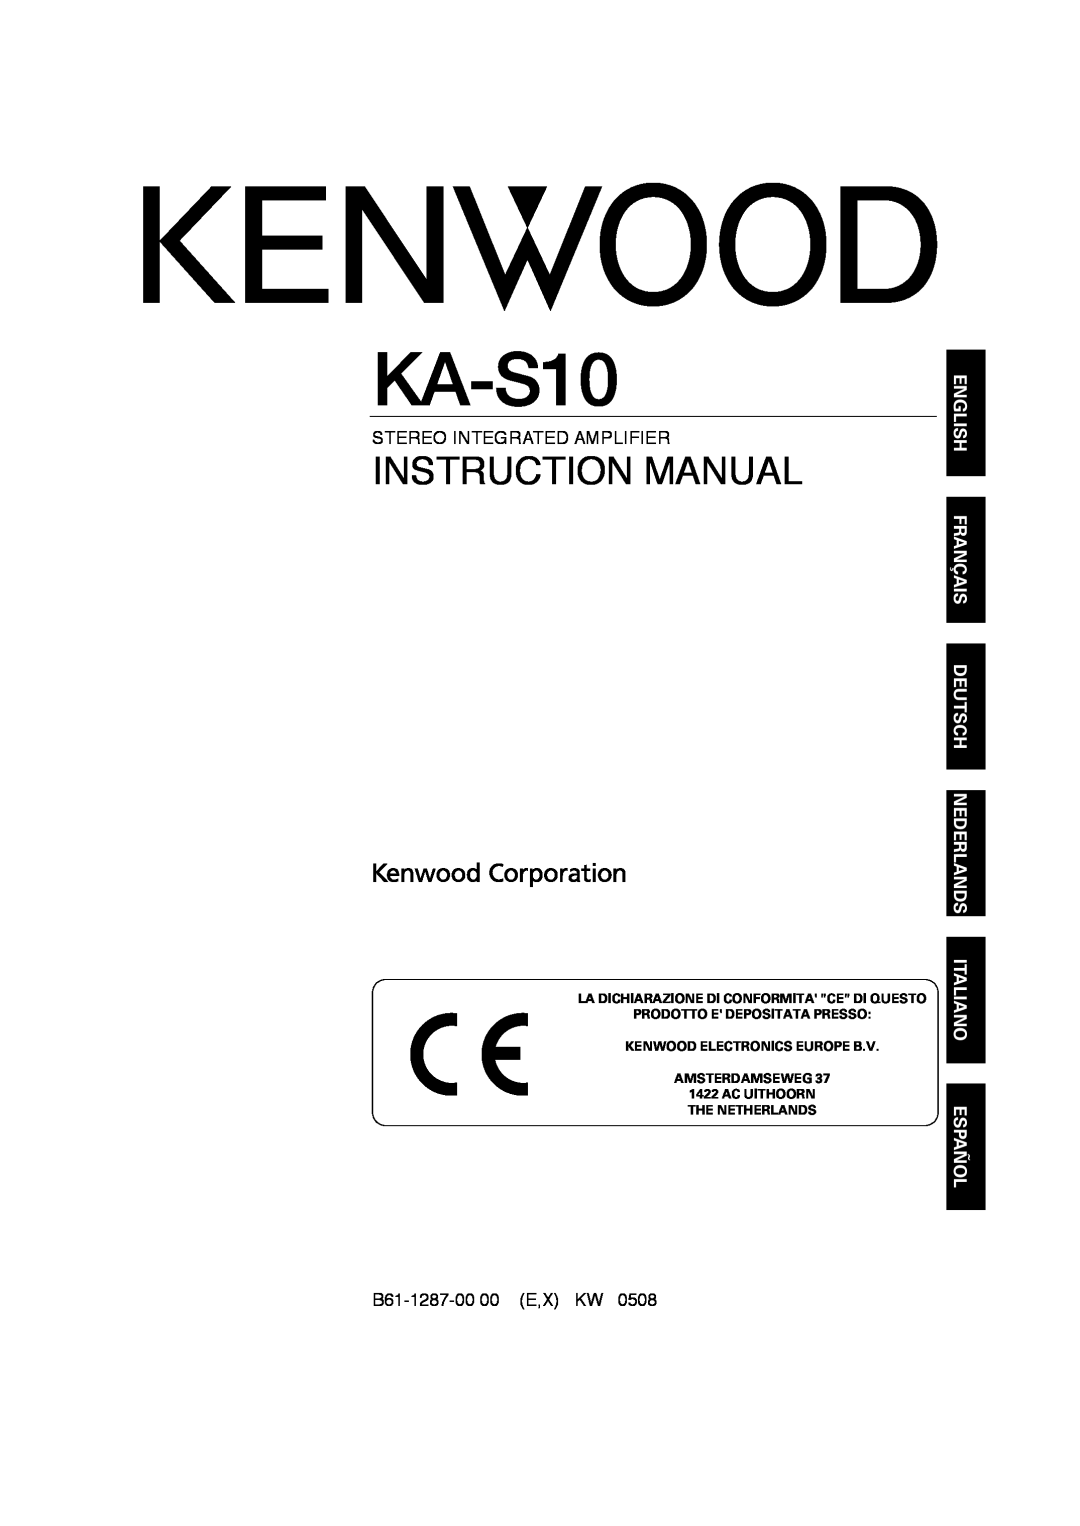 Kenwood KA-S10 instruction manual Stereo Integrated Amplifier, B61-1287-0000 E,X KW 